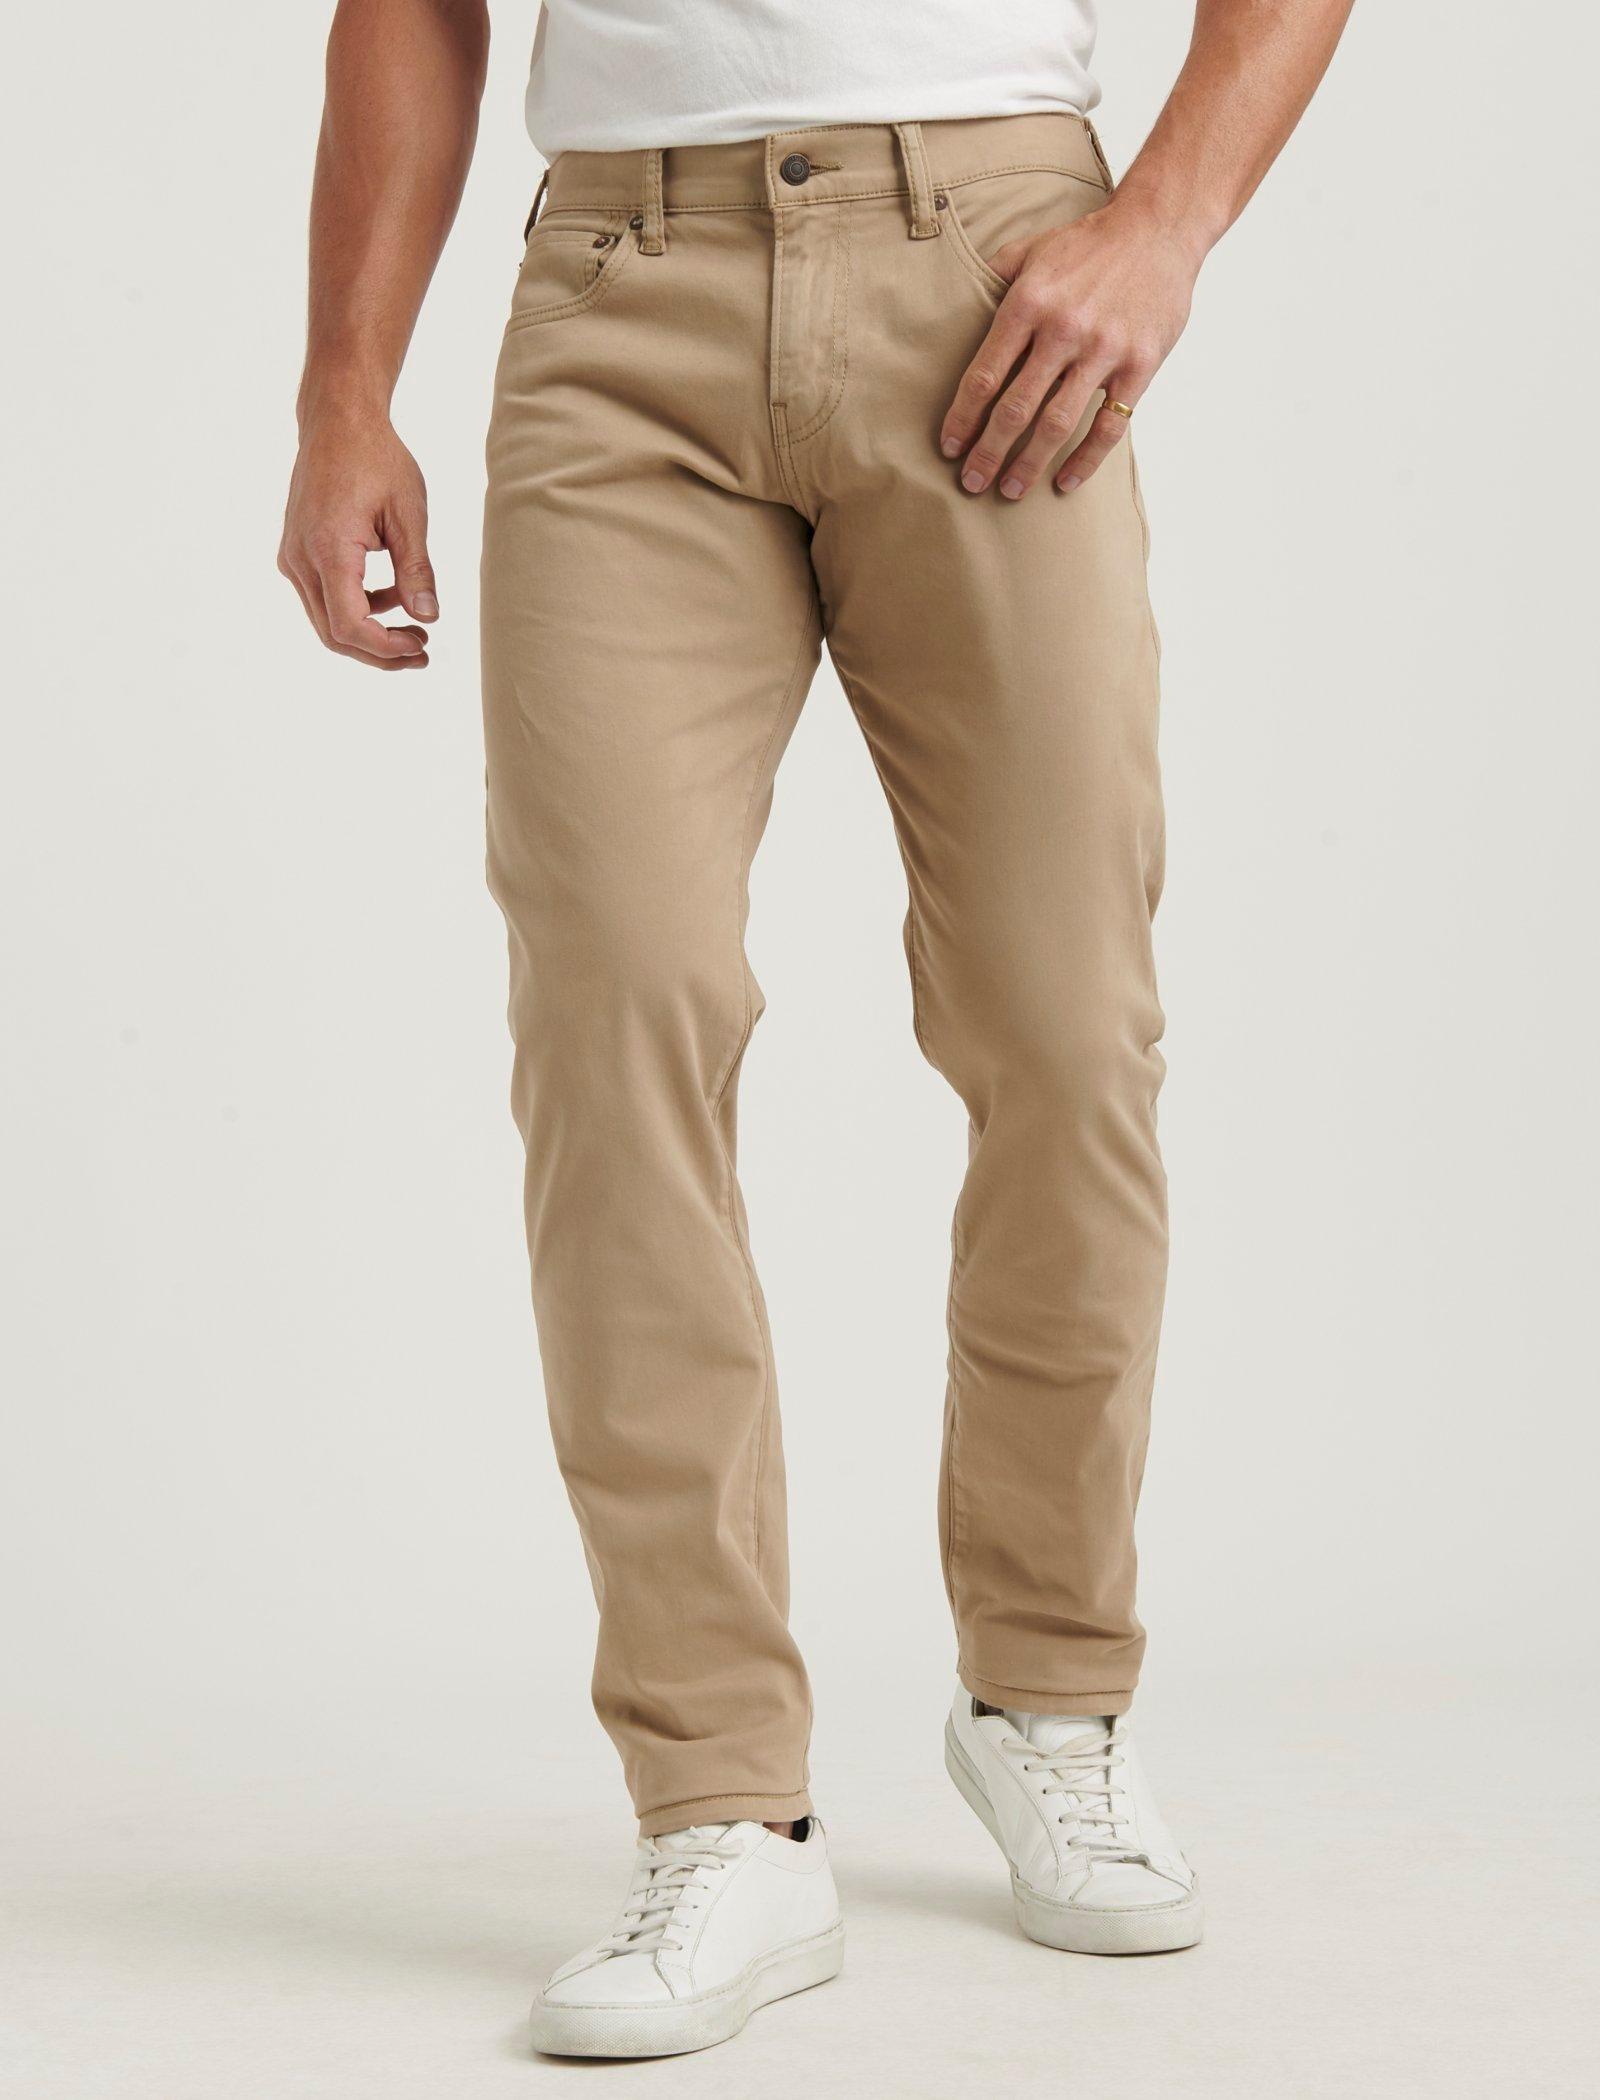 lucky brand men's khaki pants